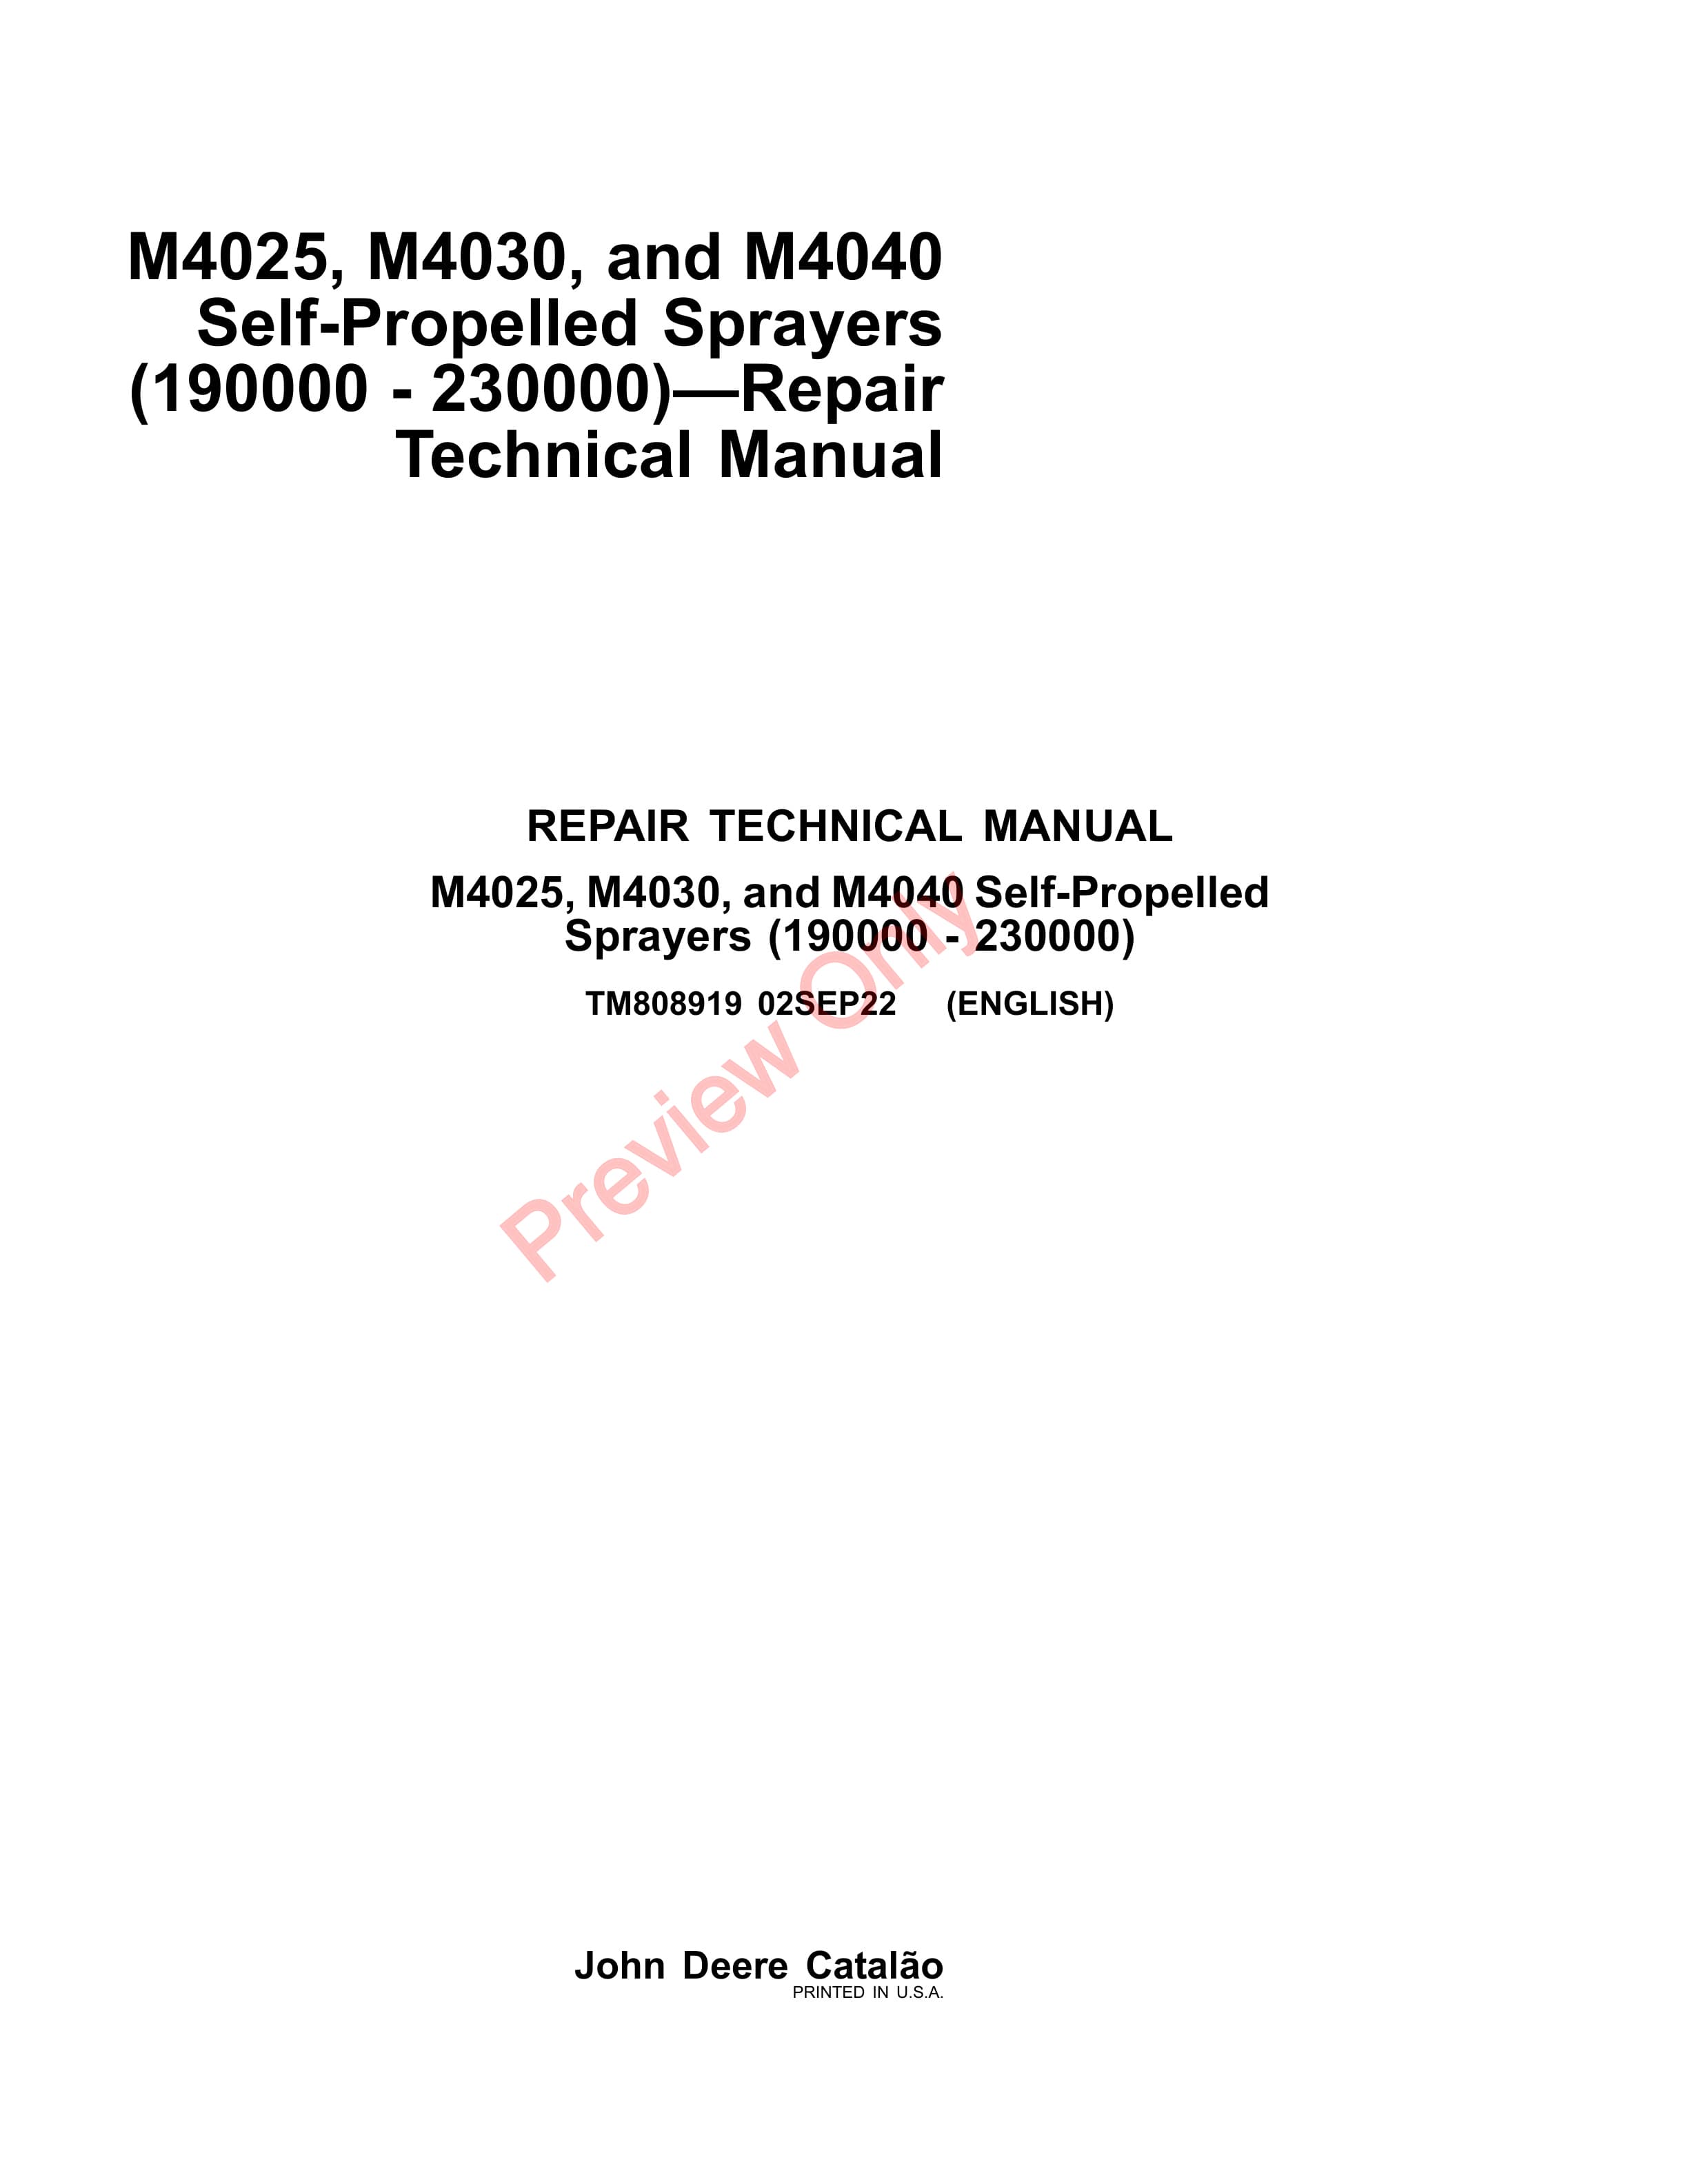 John Deere M4025 M4030 and M4040 Self Propelled Sprayers 190000 Repair Technical Manual TM808919 02SEP22 1